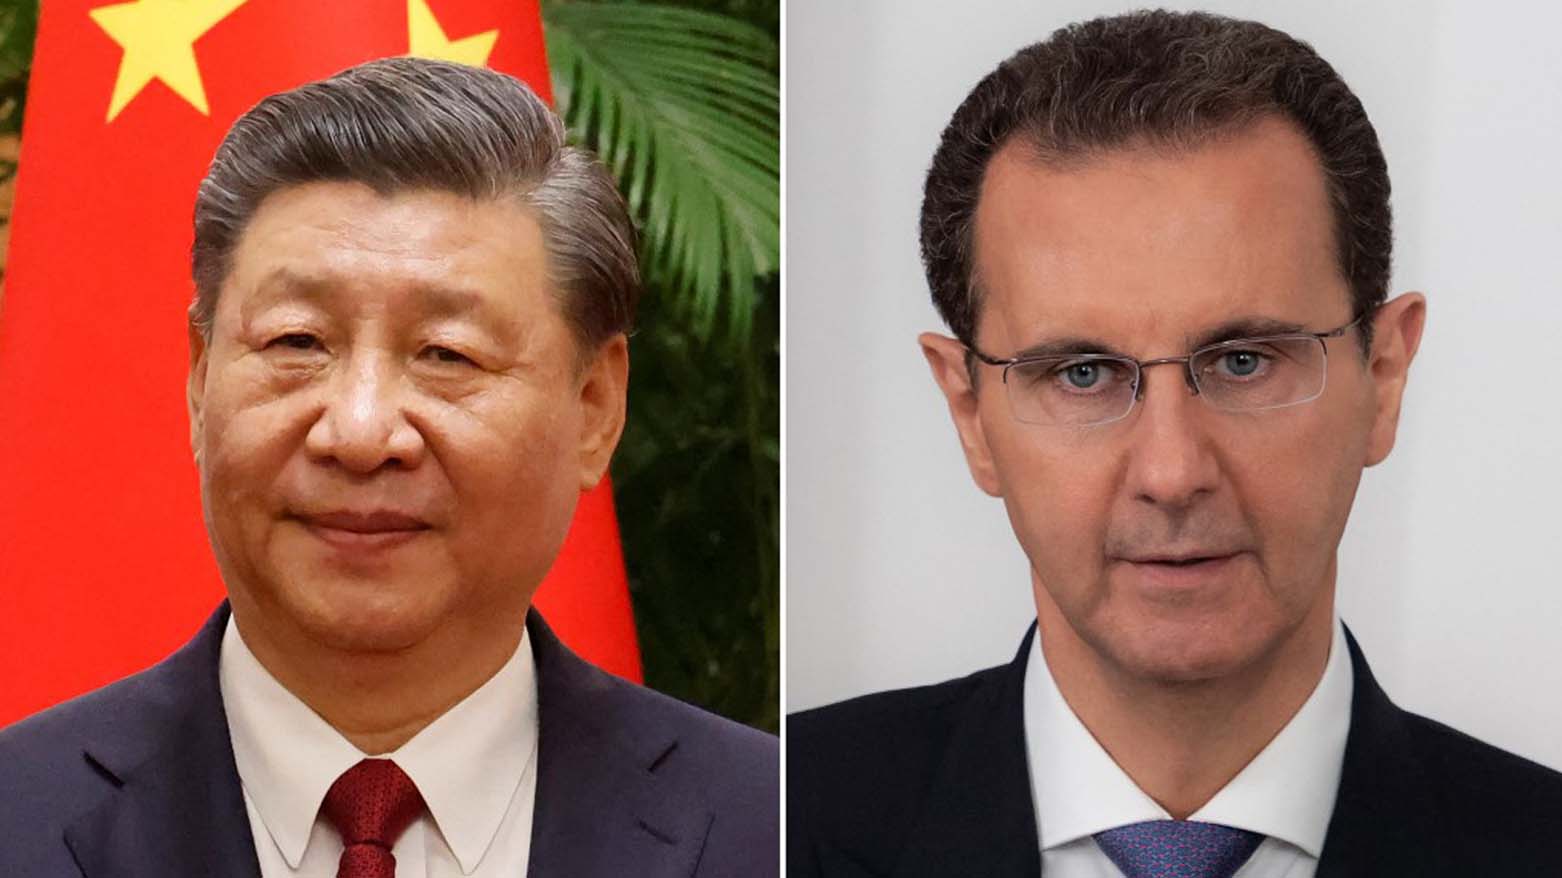 Syrias Assad visits China seeking funds